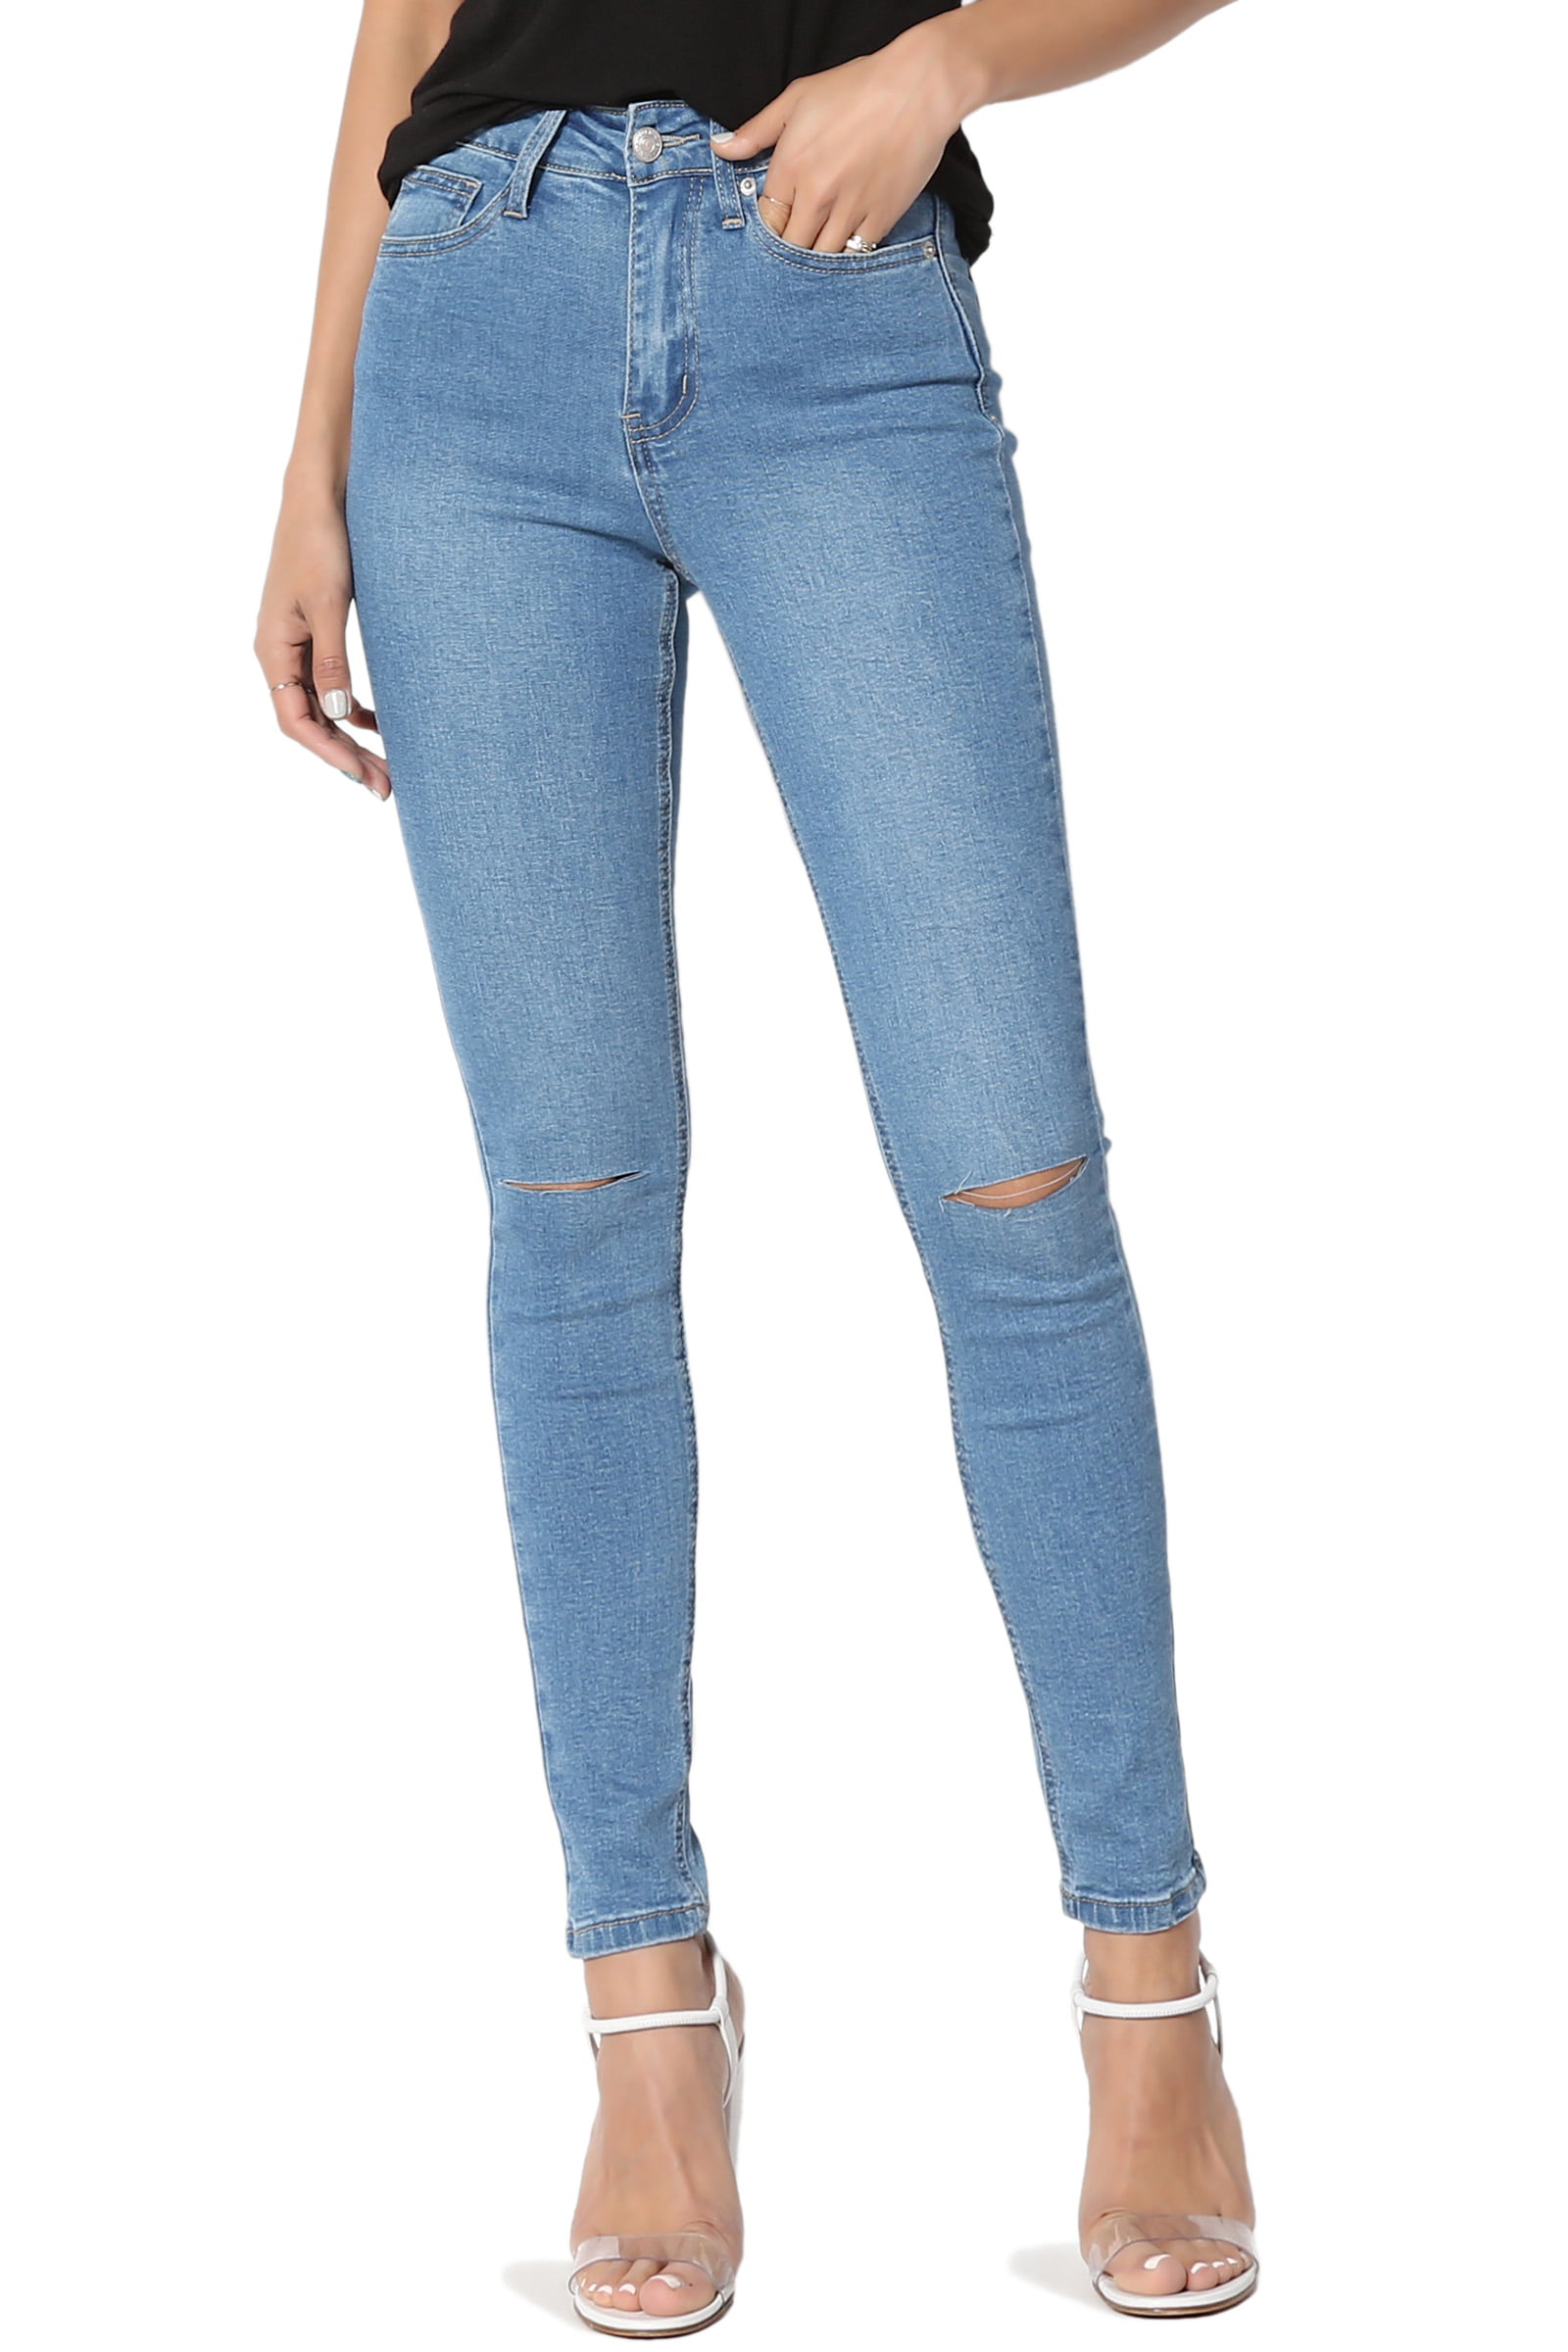 women's petite stretch jeans